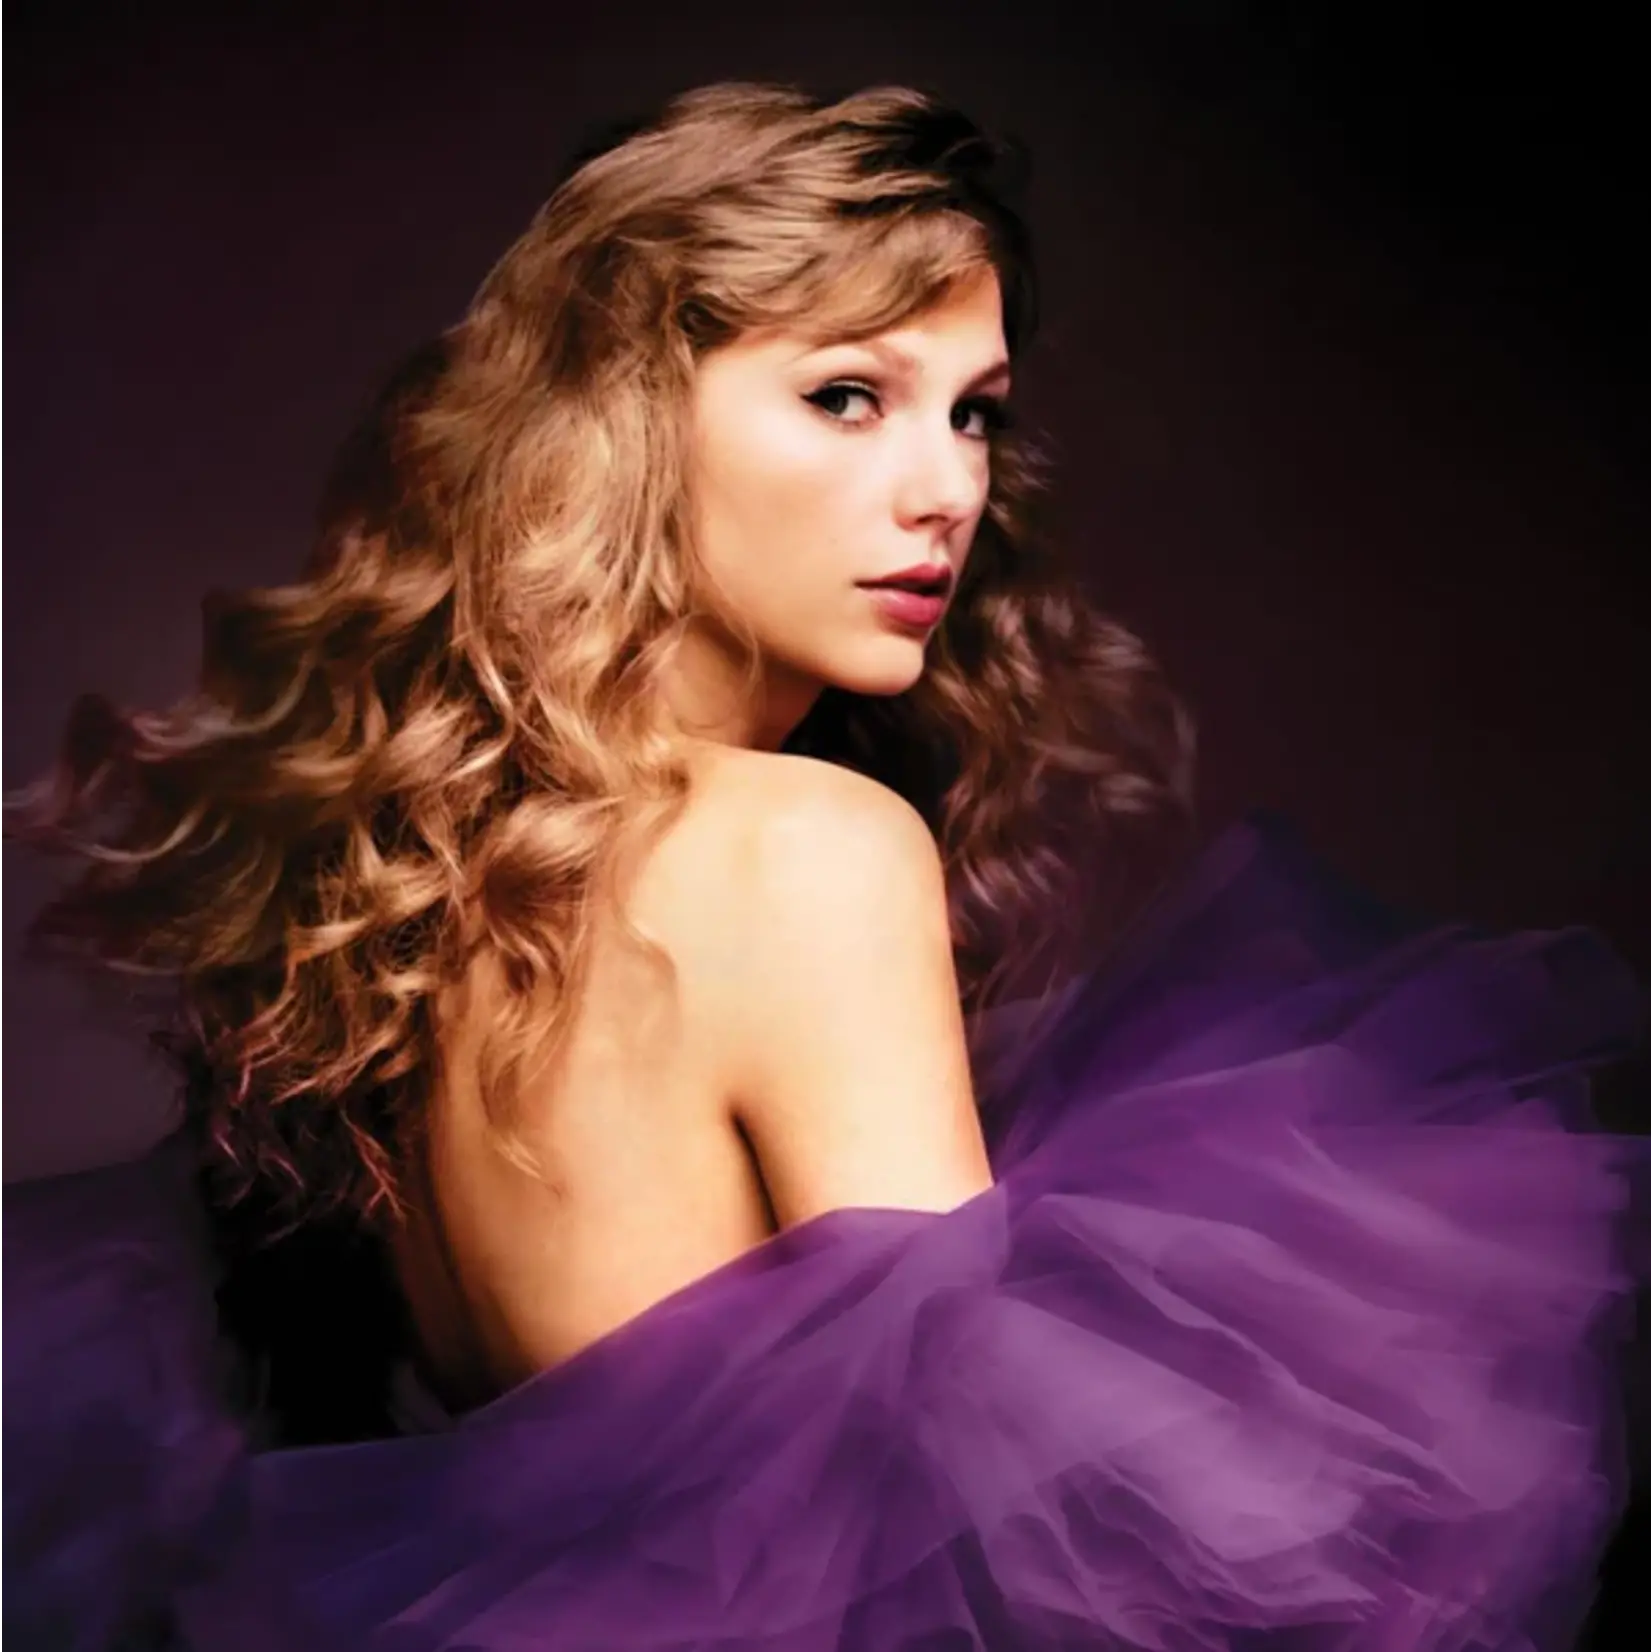 Taylor Swift - Speak Now - Taylor's Version (Orchid Marbled Vinyl) (3LP)